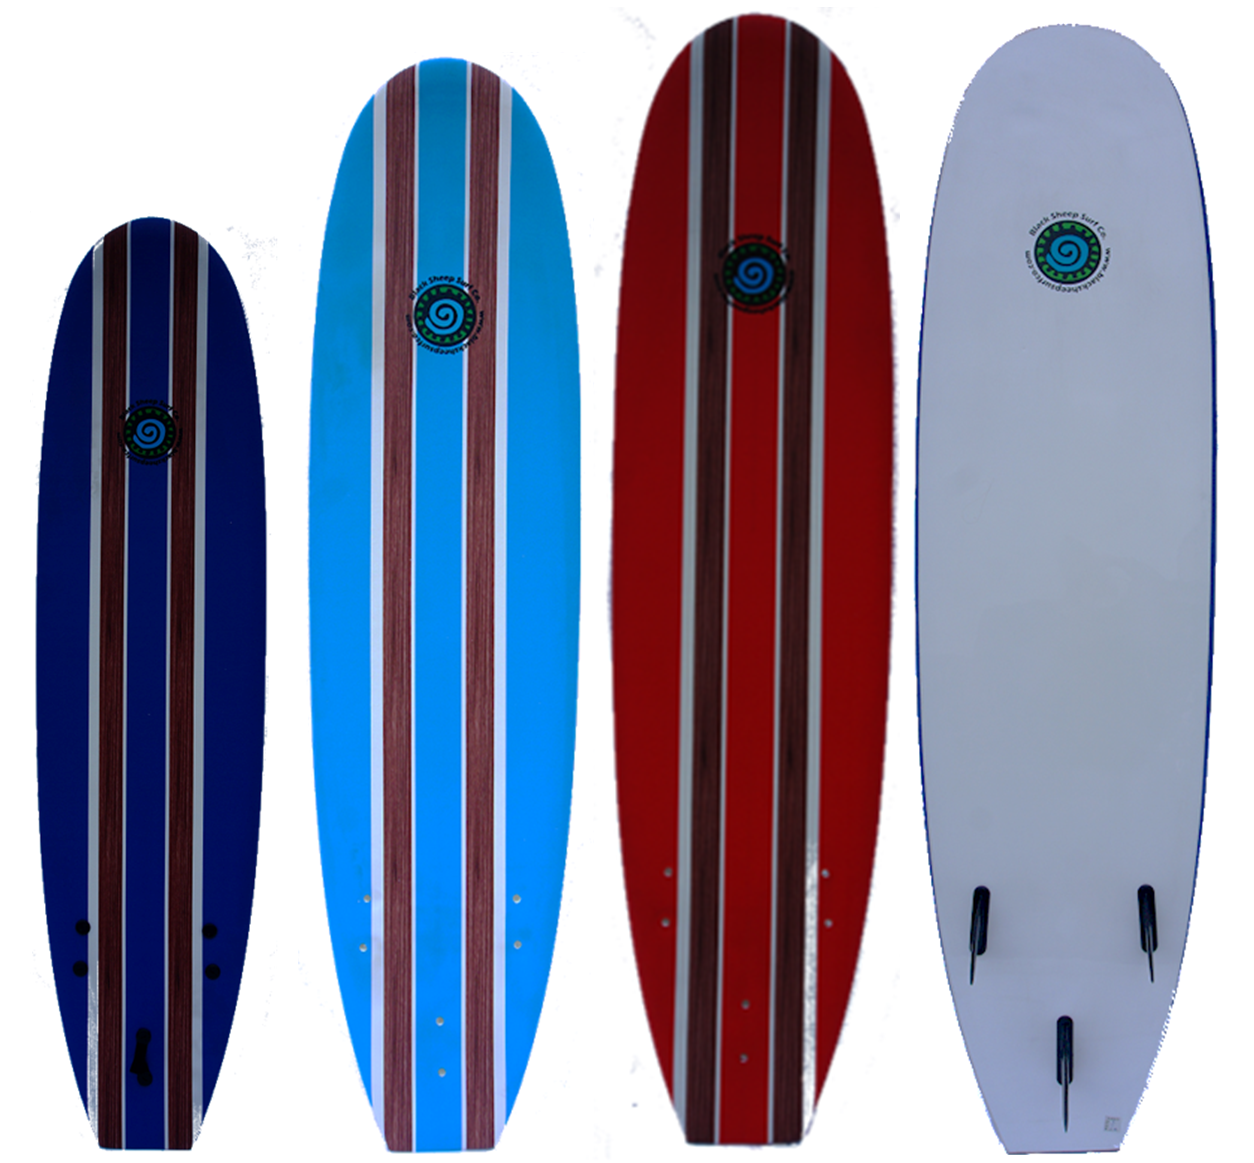 black-sheep-surf-co-softboard-range-surfboard-red-blue-white-wooden-stripe-galway-ireland-surf-surfing